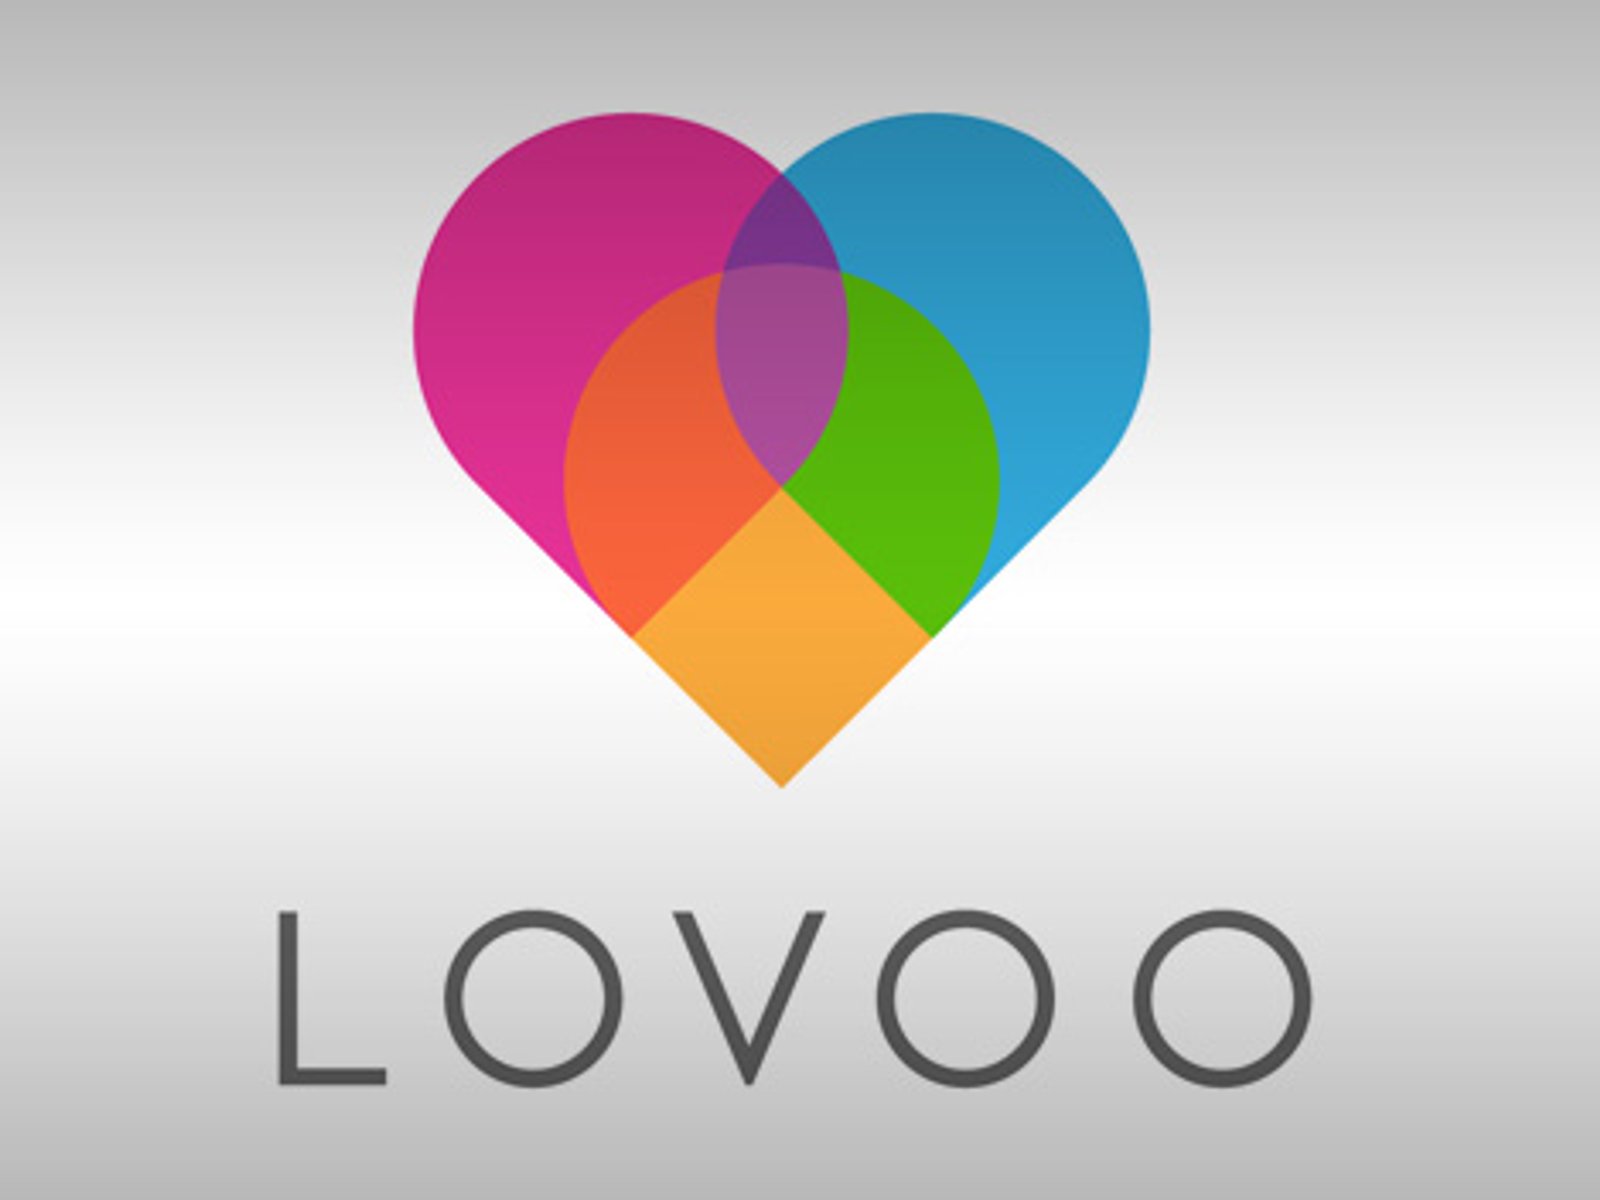 Lovoo passwort vergessen bekomme keine email